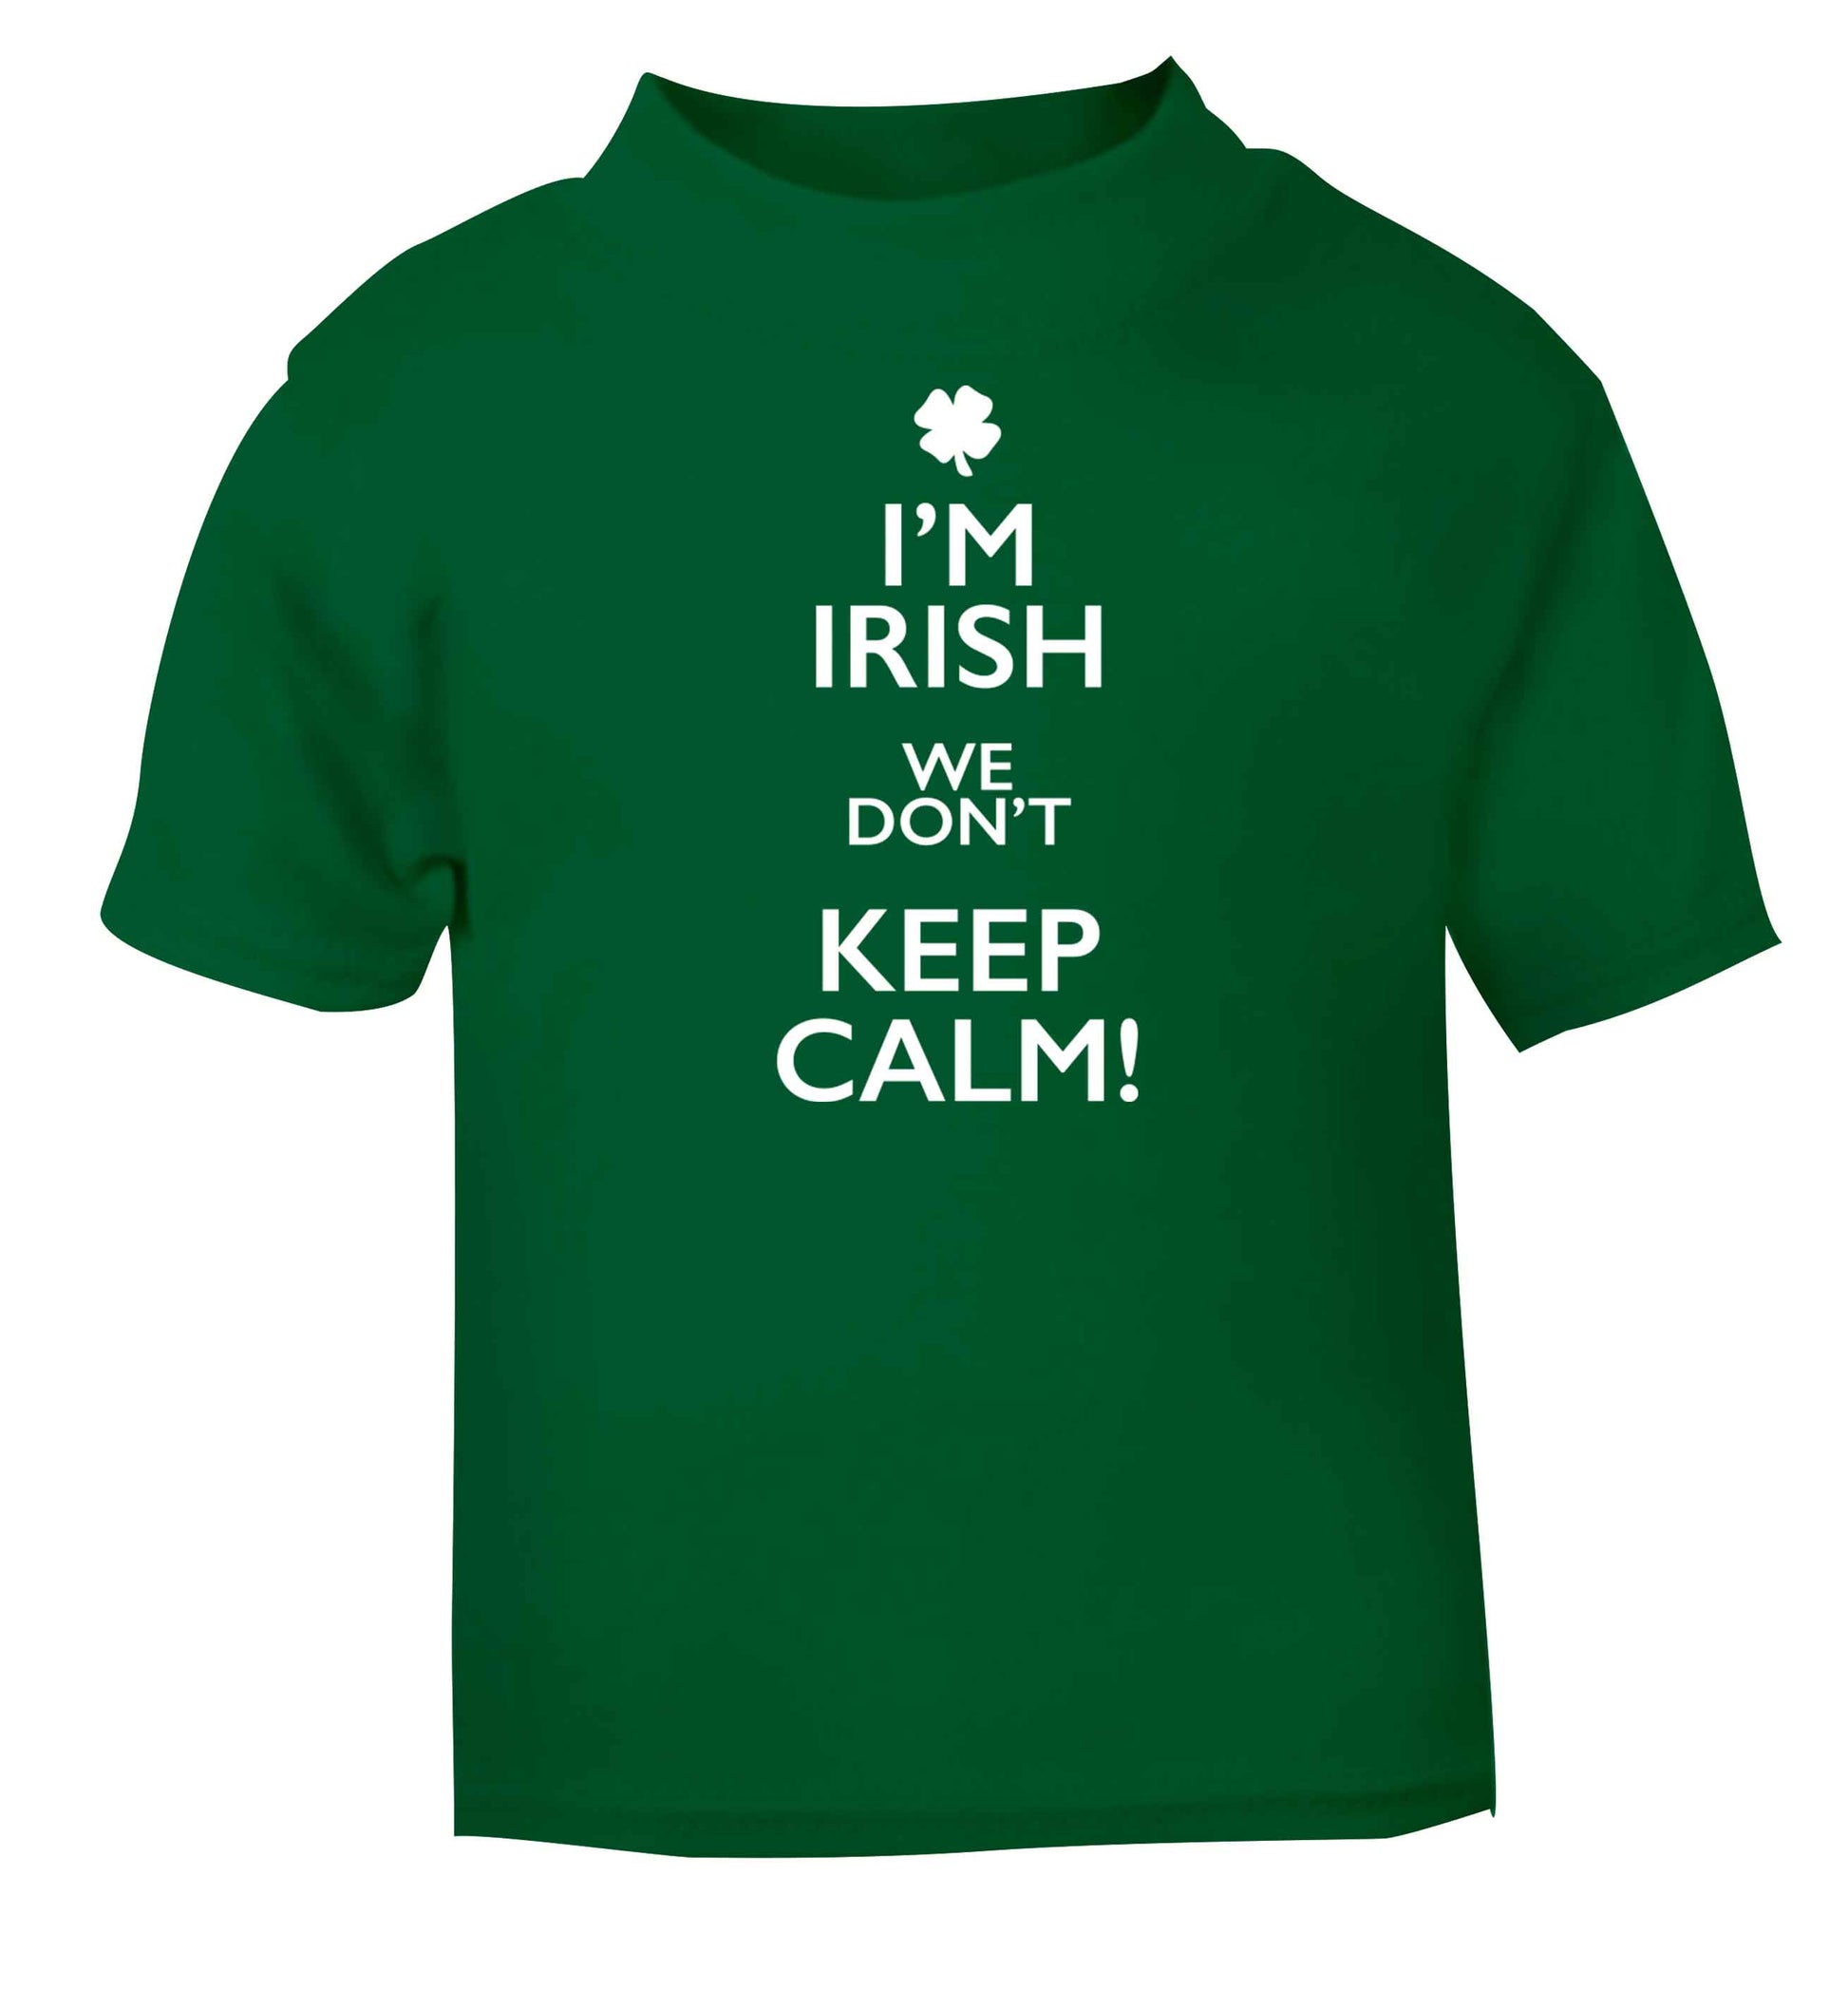 I'm Irish we don't keep calm green baby toddler Tshirt 2 Years